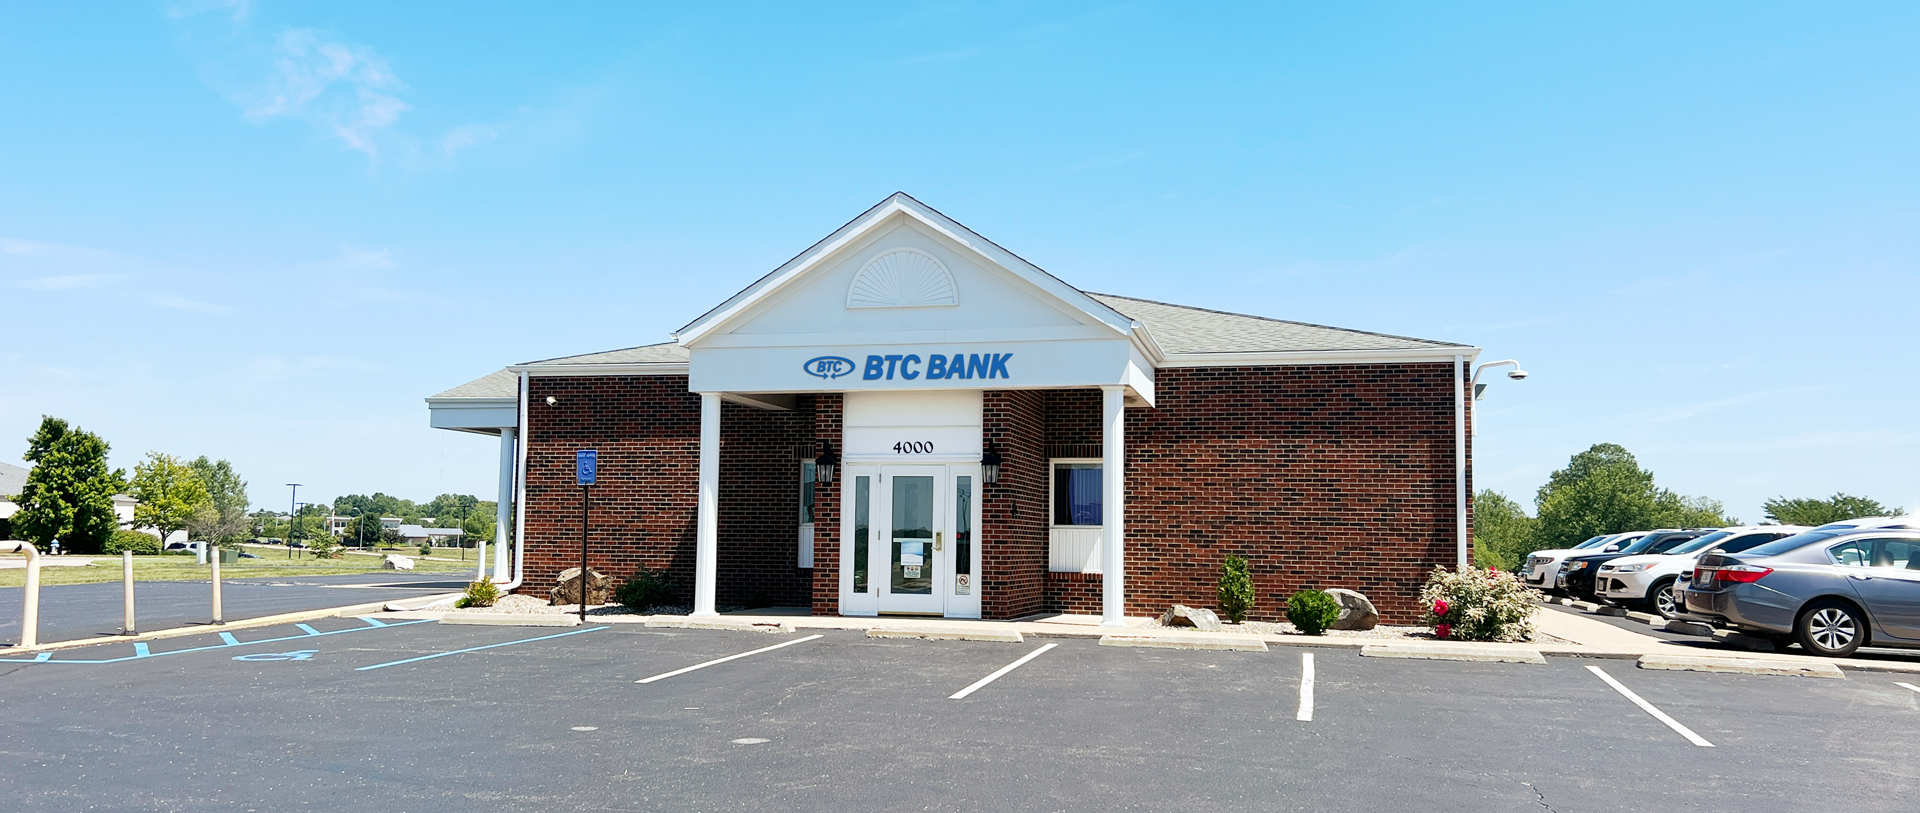 btc bank locations missouri